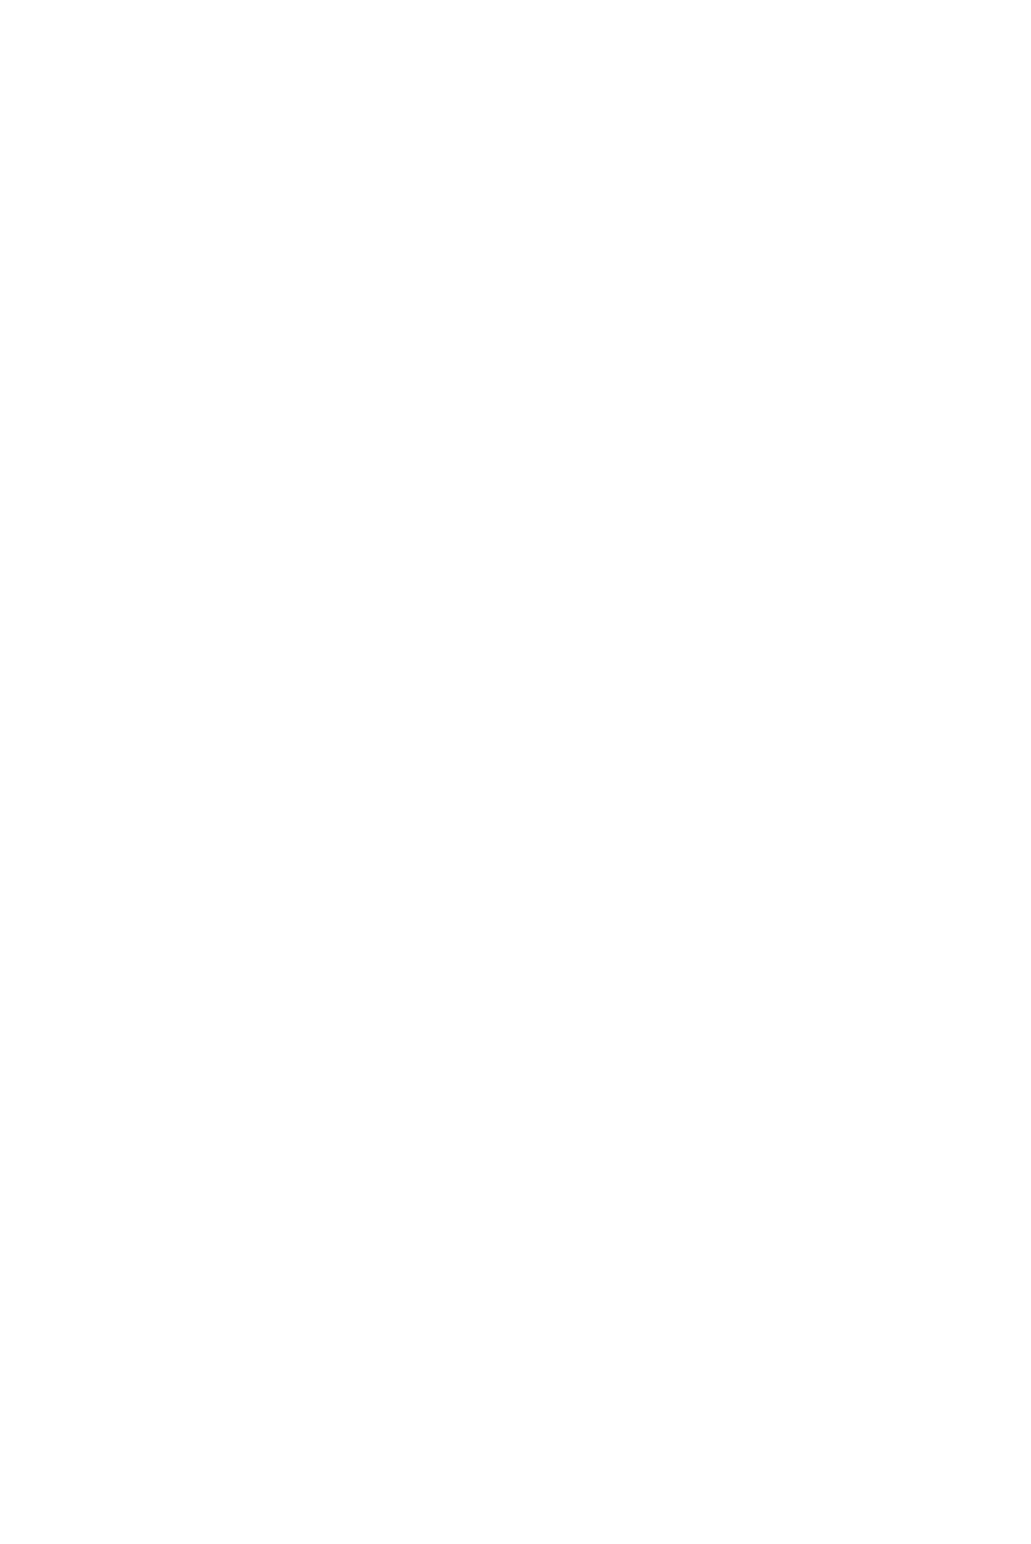 Davis Commodities logo for dark backgrounds (transparent PNG)